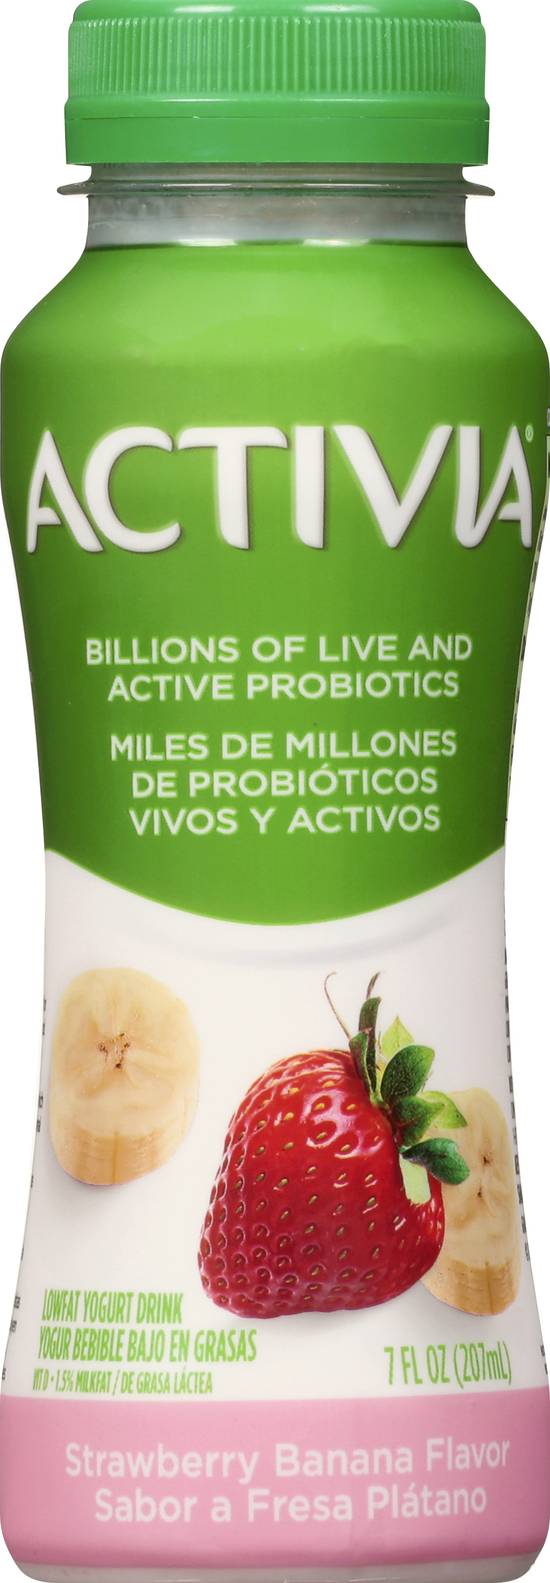 Activia Lowfat Probiotic Strawberry Yogurt